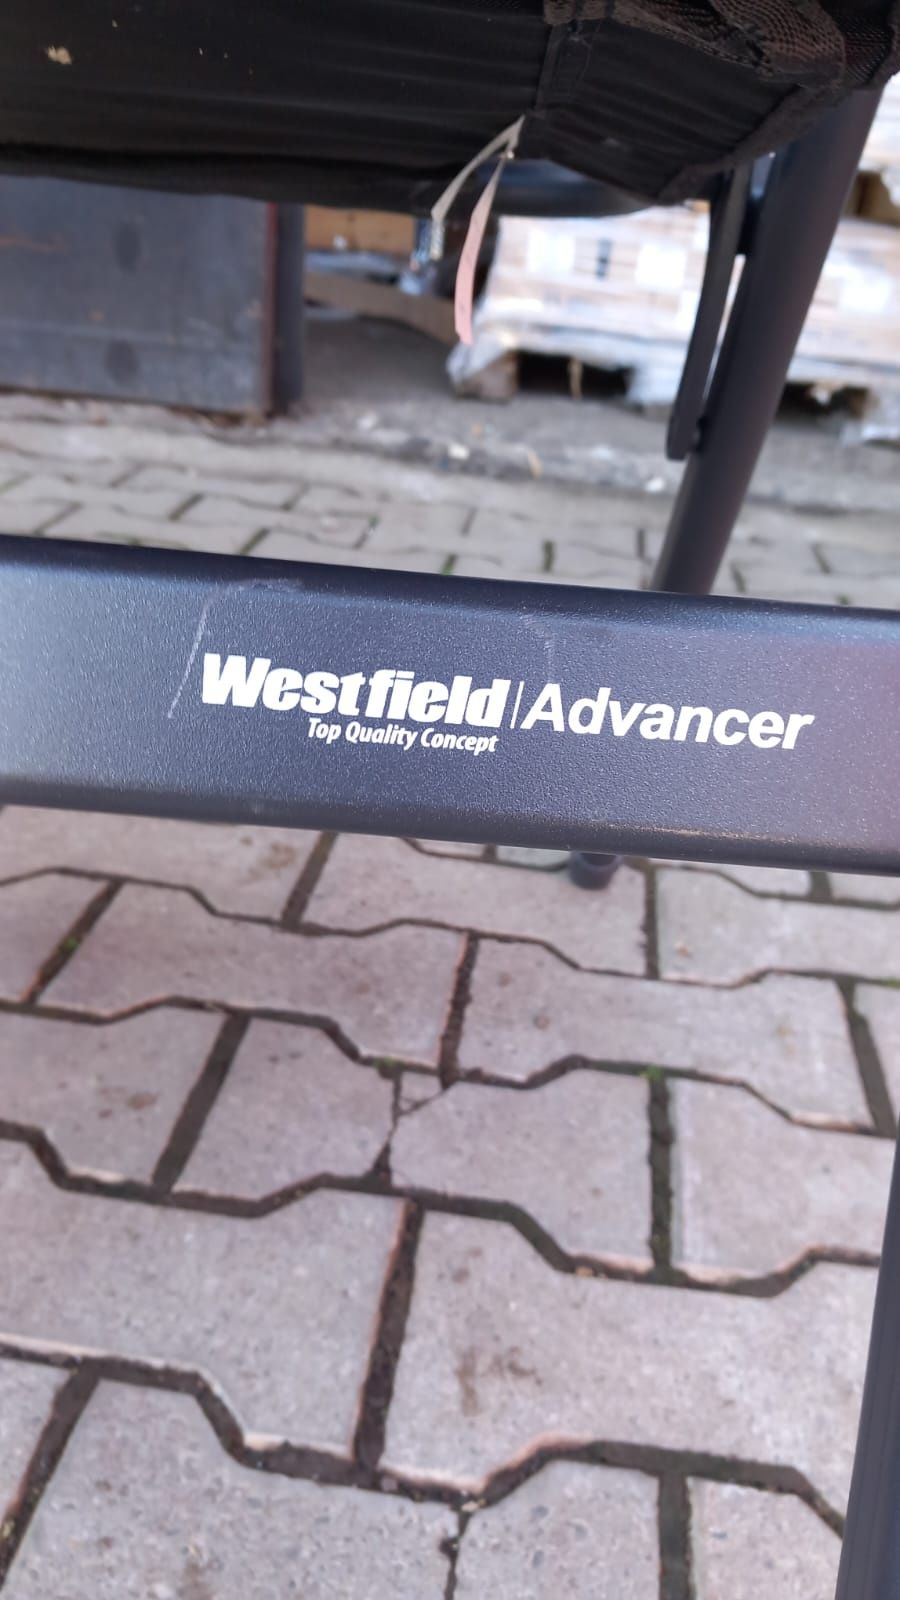 Scaun pliabil Westfield Advancer